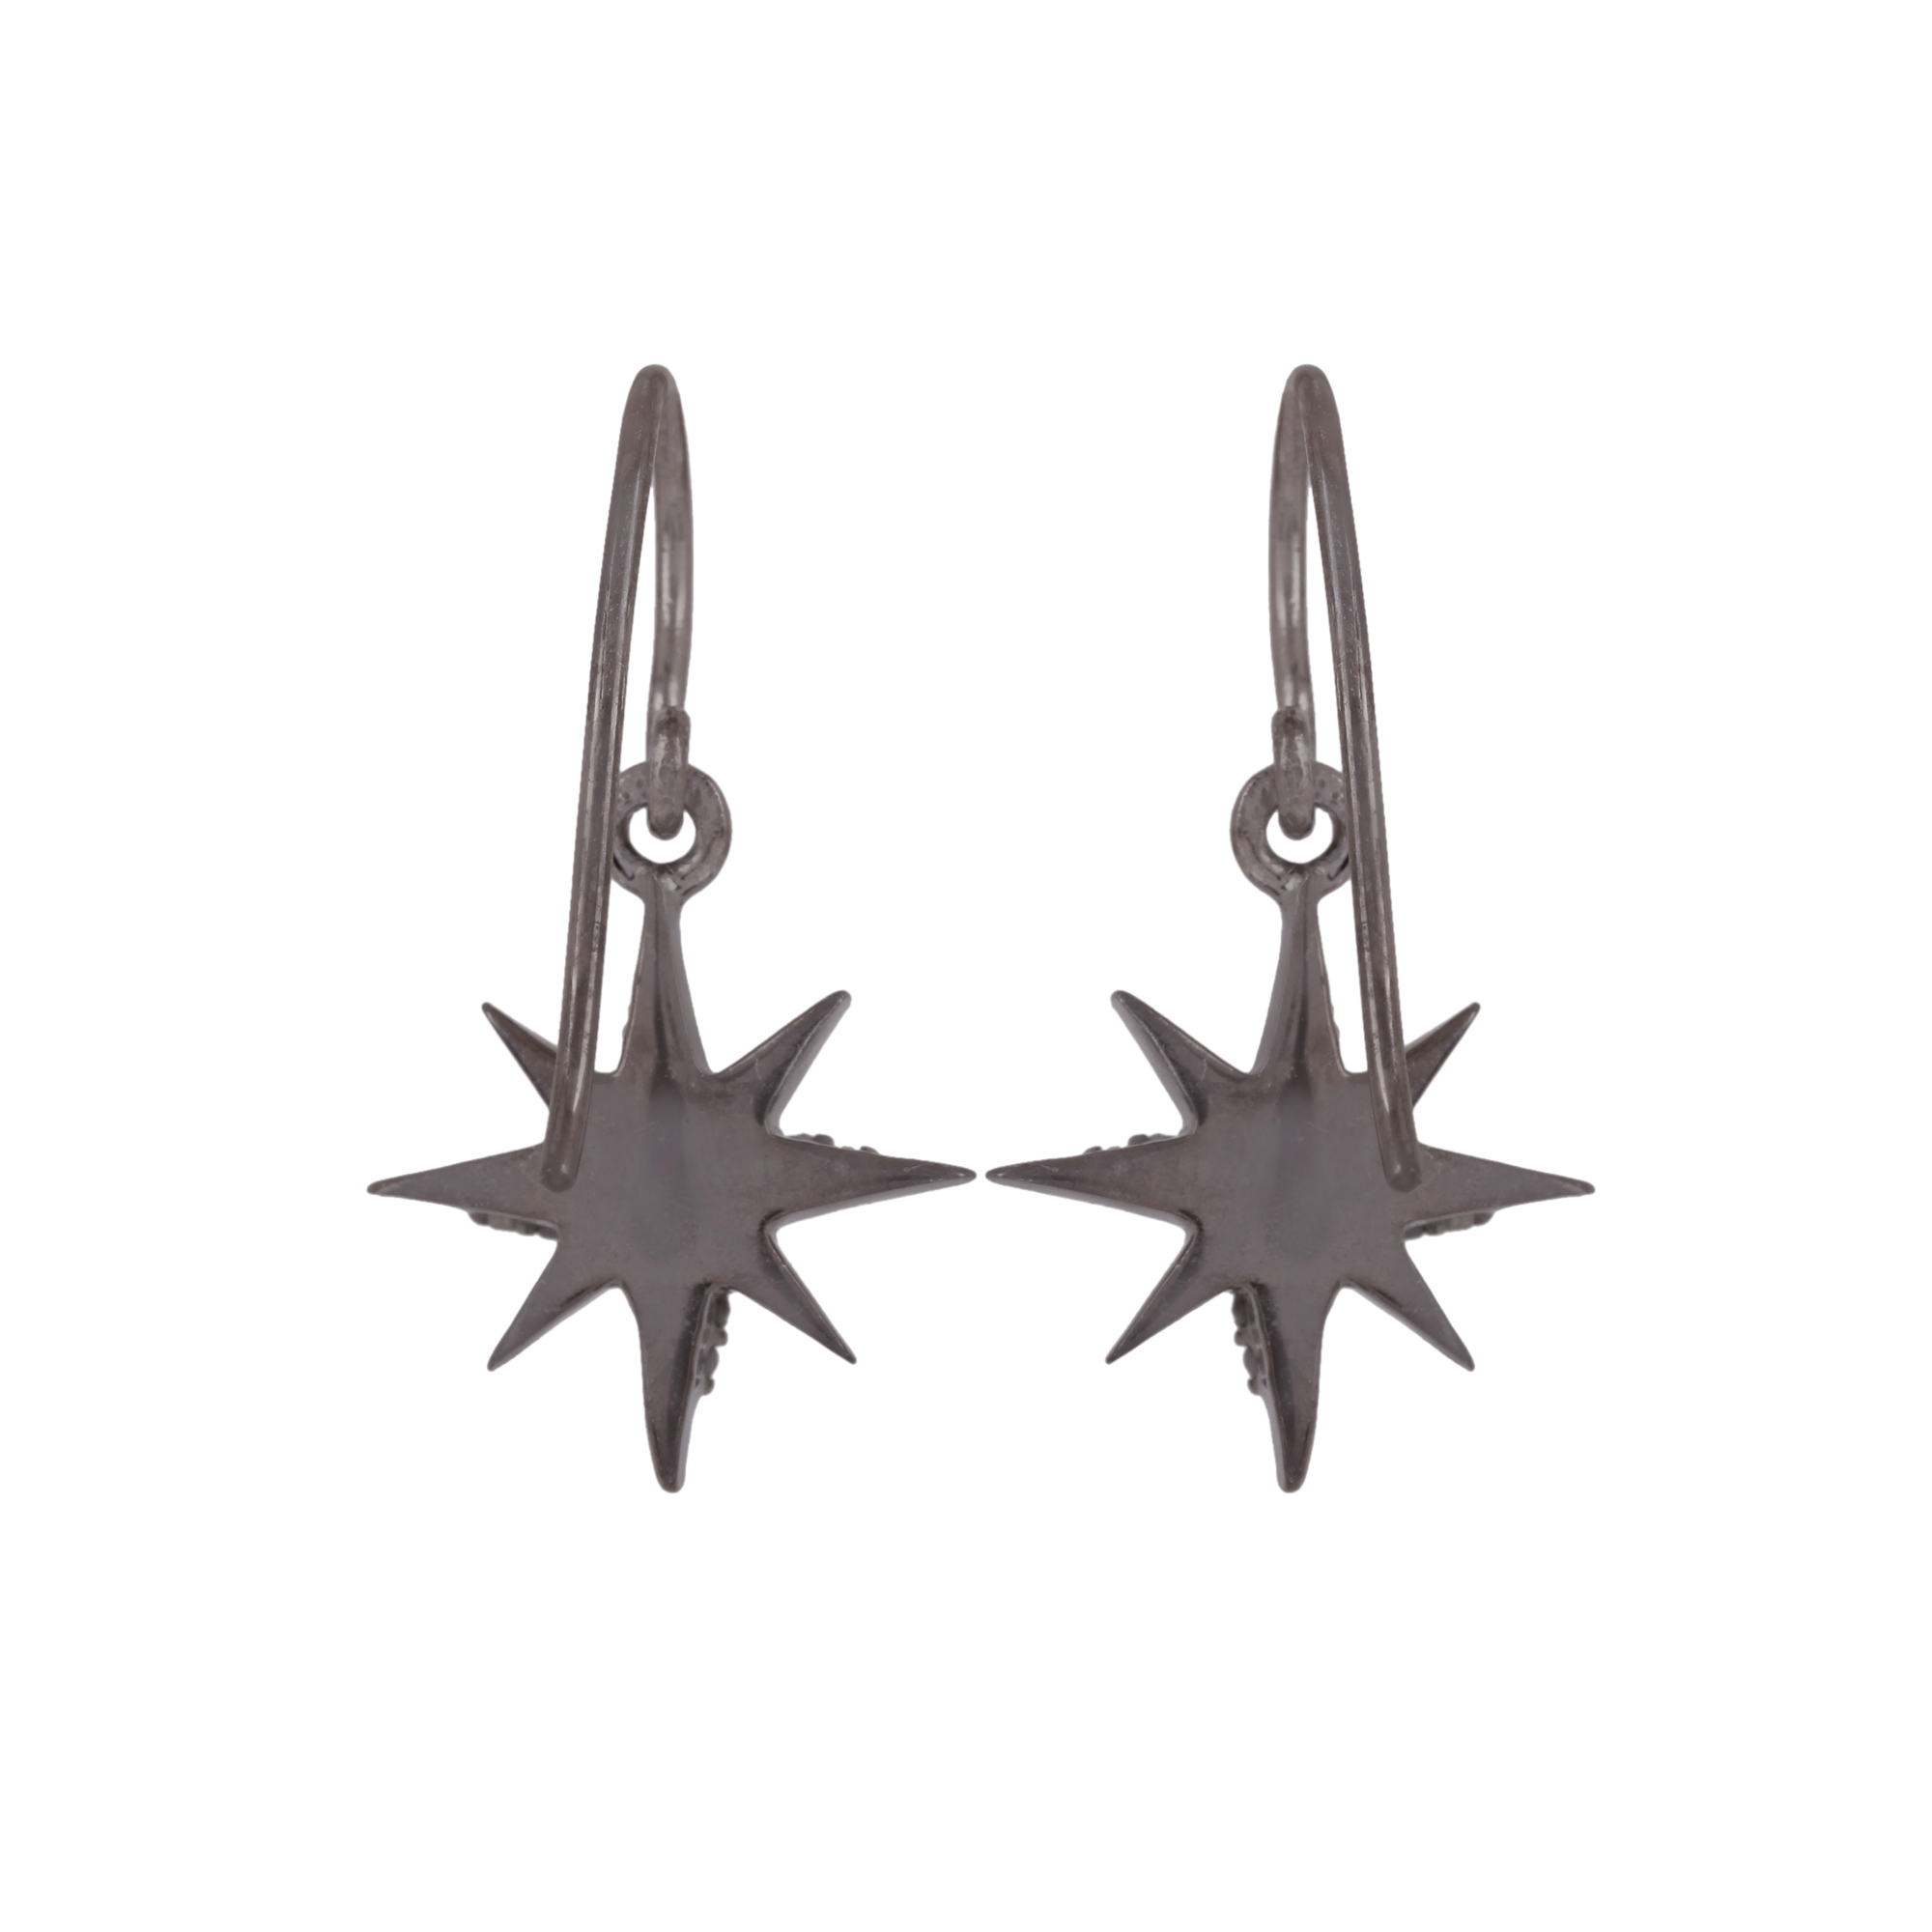 Genuine diamond star hook earrings made in 925 sterling silver